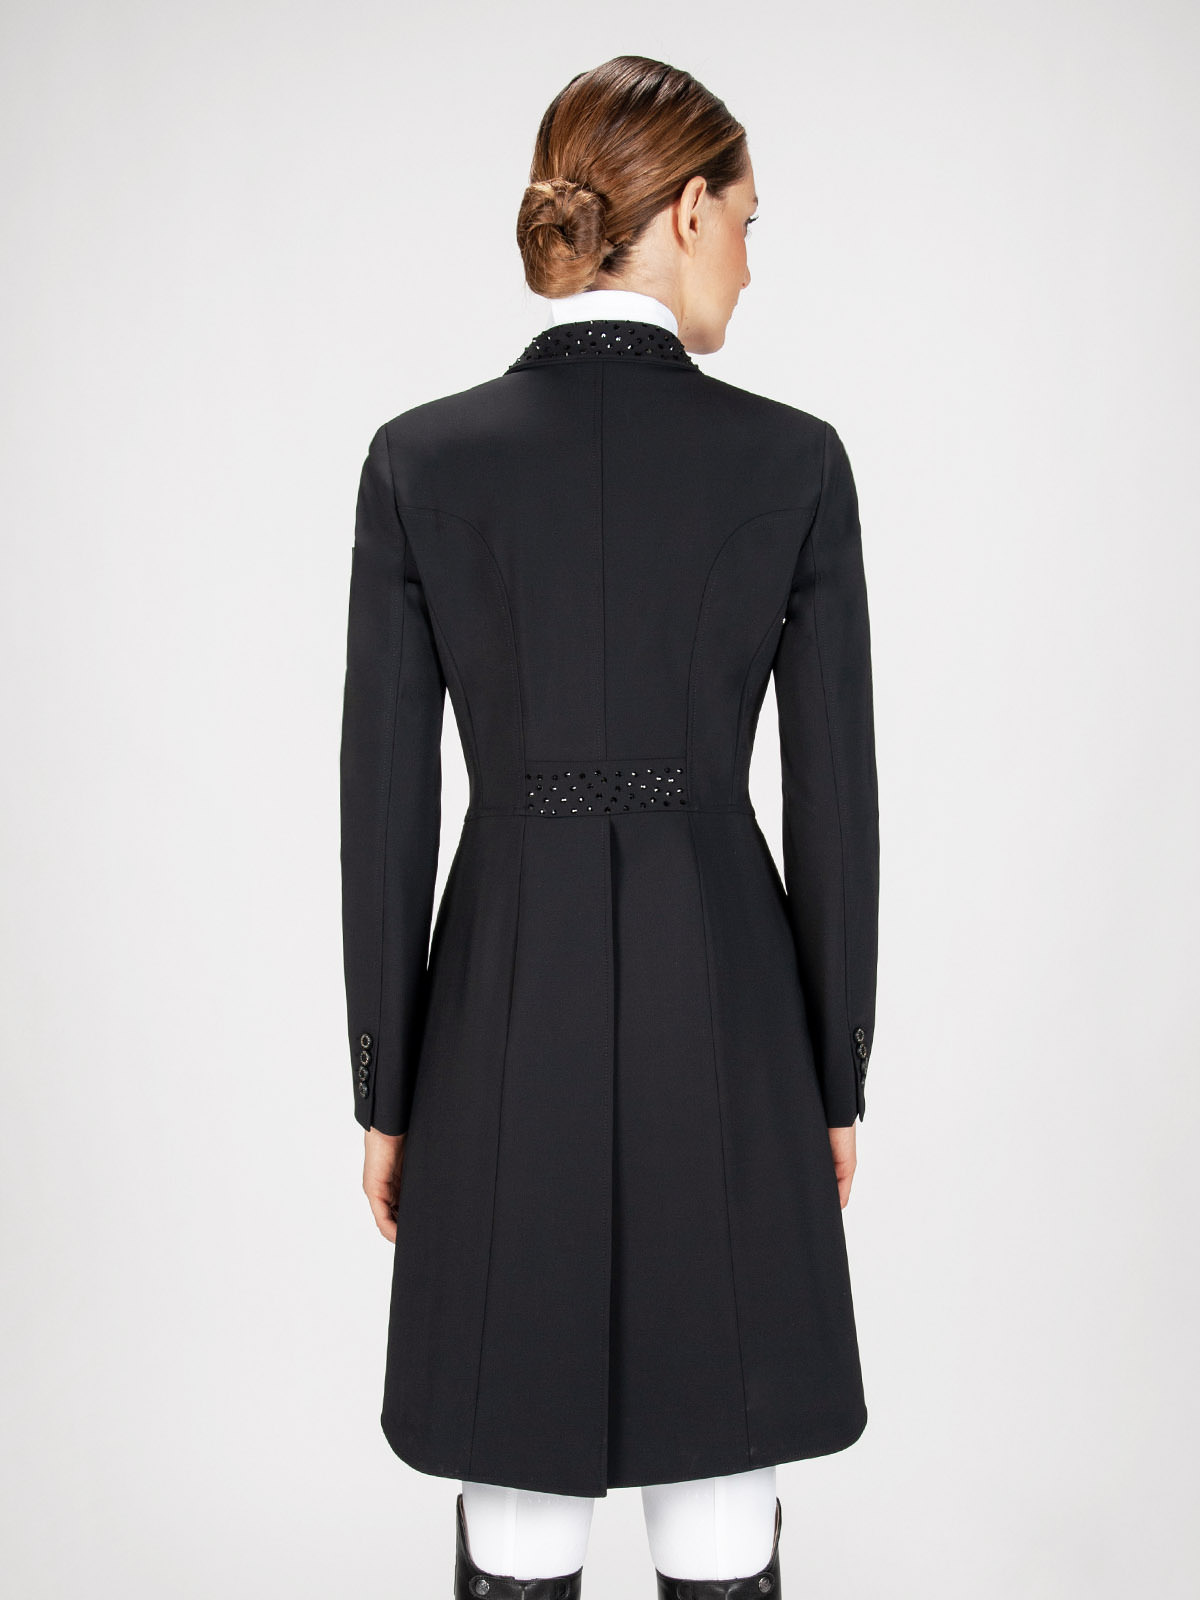 MARILYN - Women's Dressage Tail Coat X-Cool Evo 2